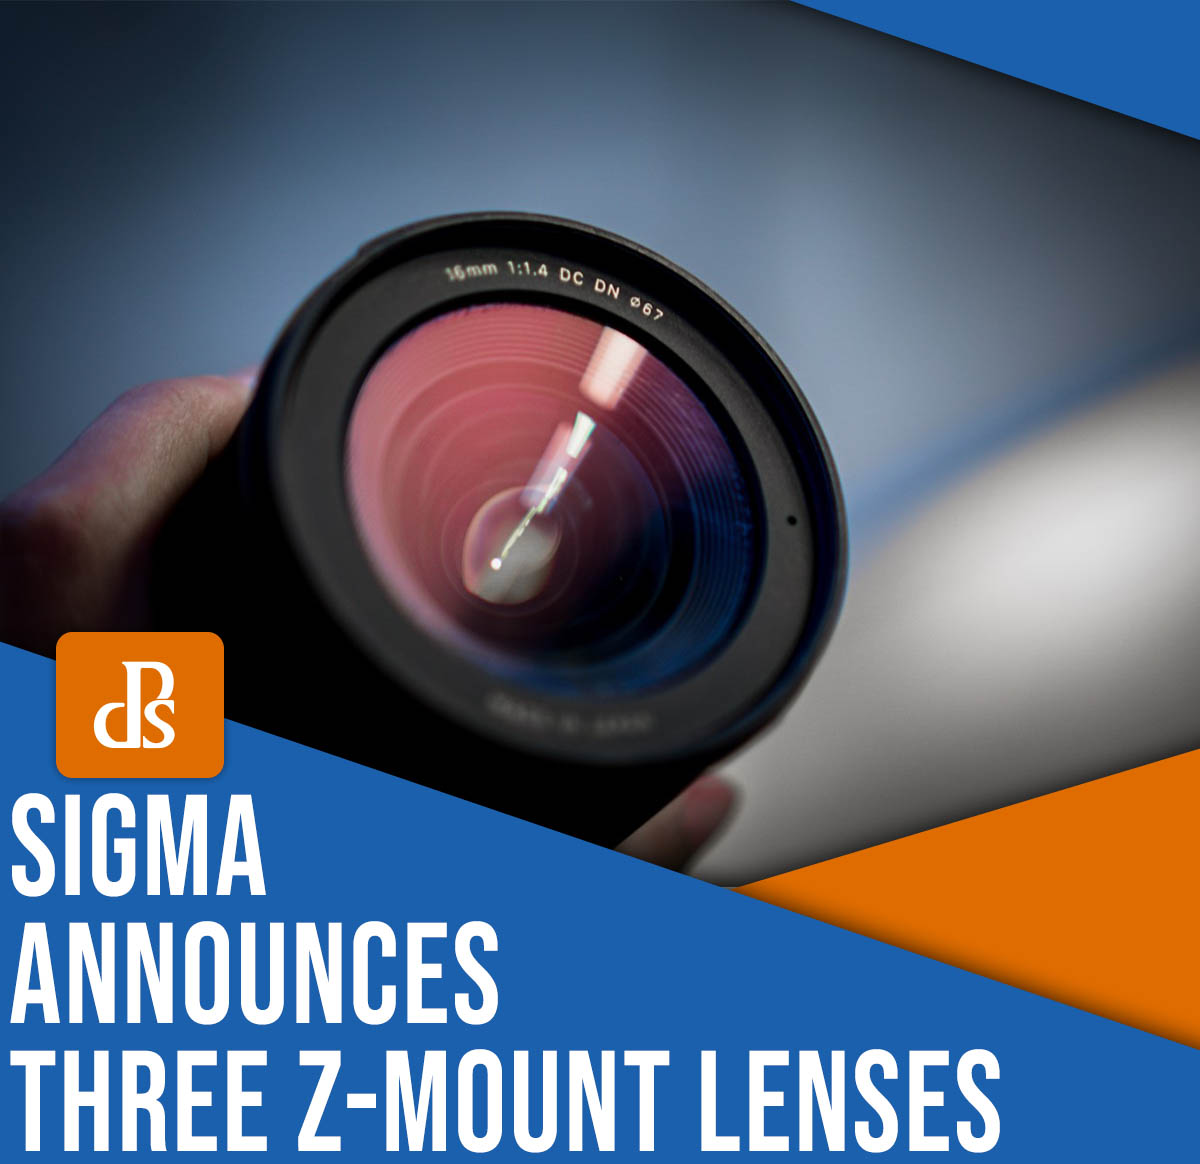 Sigma announces three Z-mount lenses